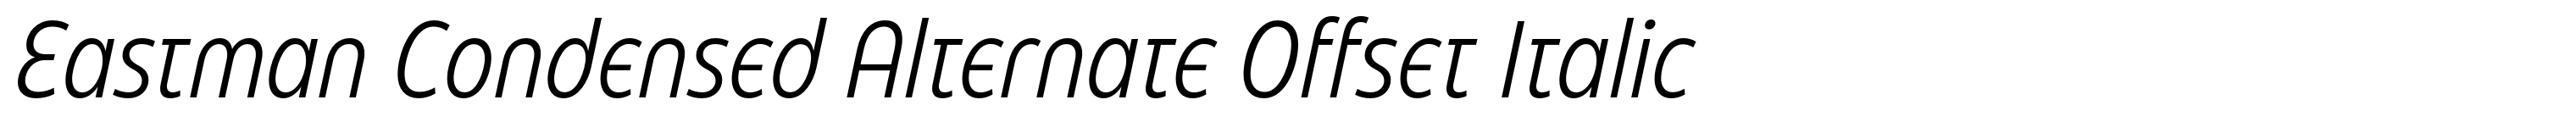 Eastman Condensed Alternate Offset Italic